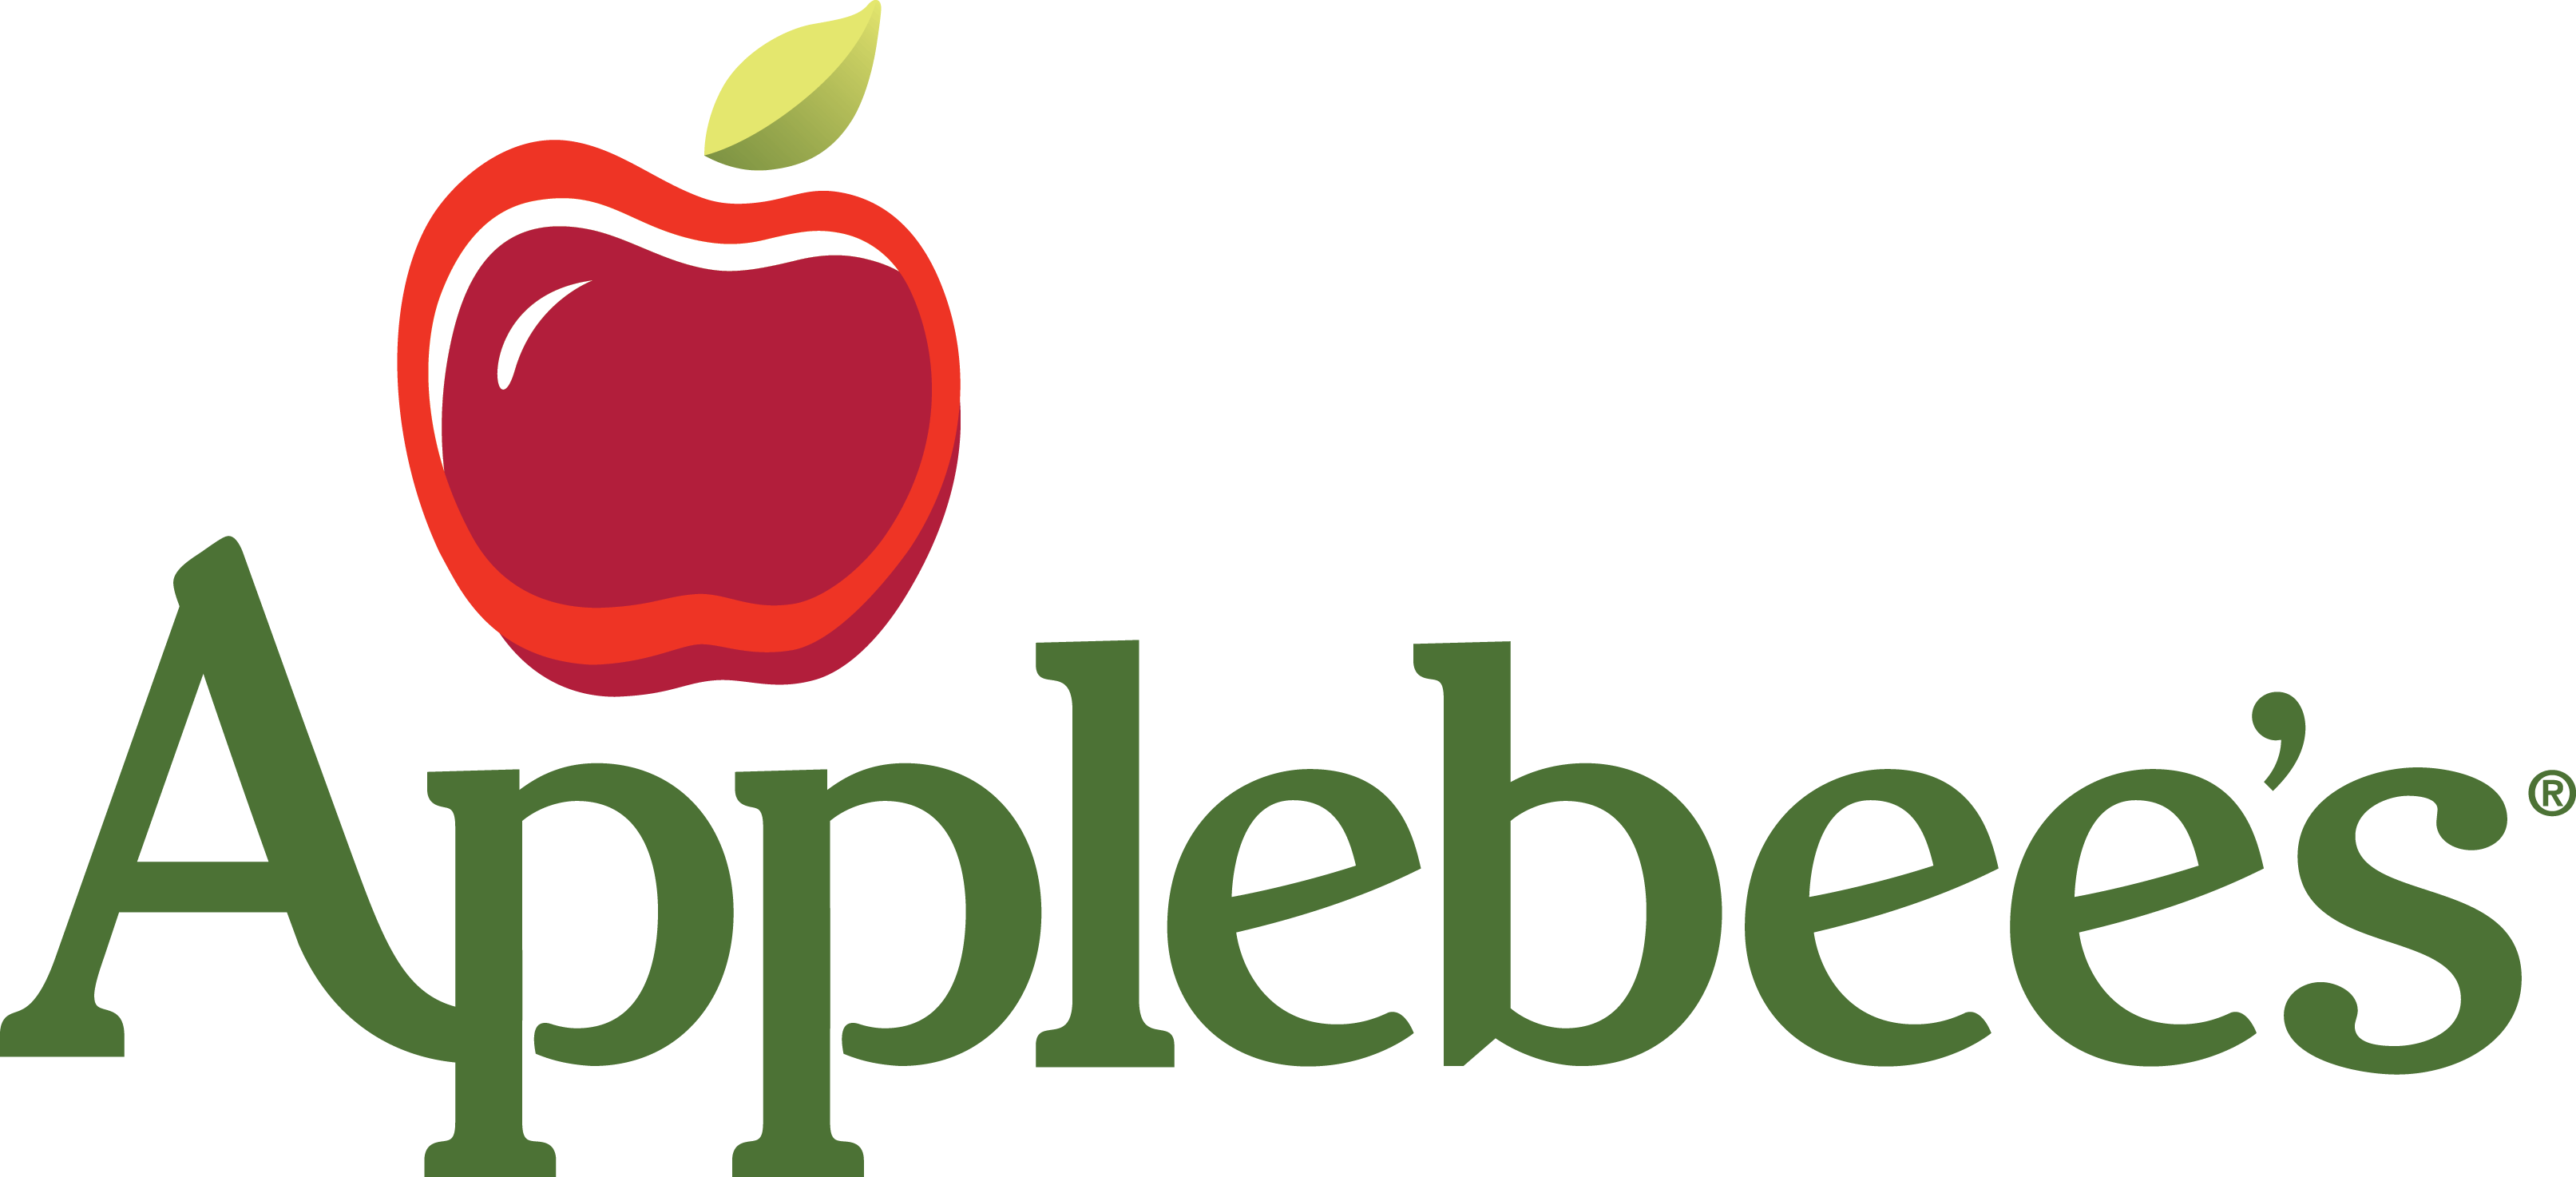 Applebee's 2013 Logo - Applebee's waitress fired for posting customer complaint - The Daily ...